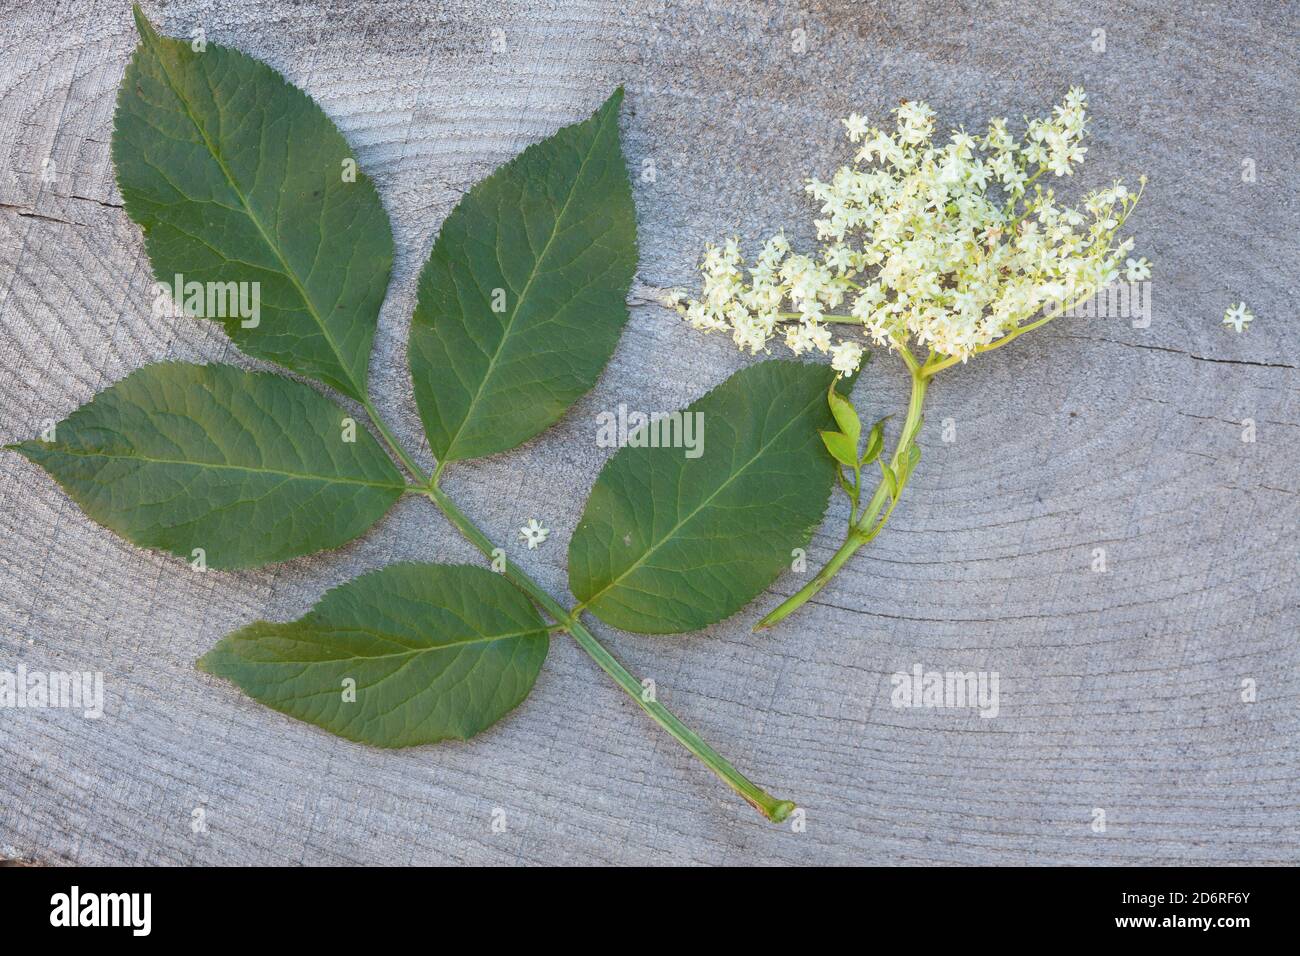 European black elder, Elderberry, Common elder (Sambucus nigra), leaf and inflorescence, Germany Stock Photo